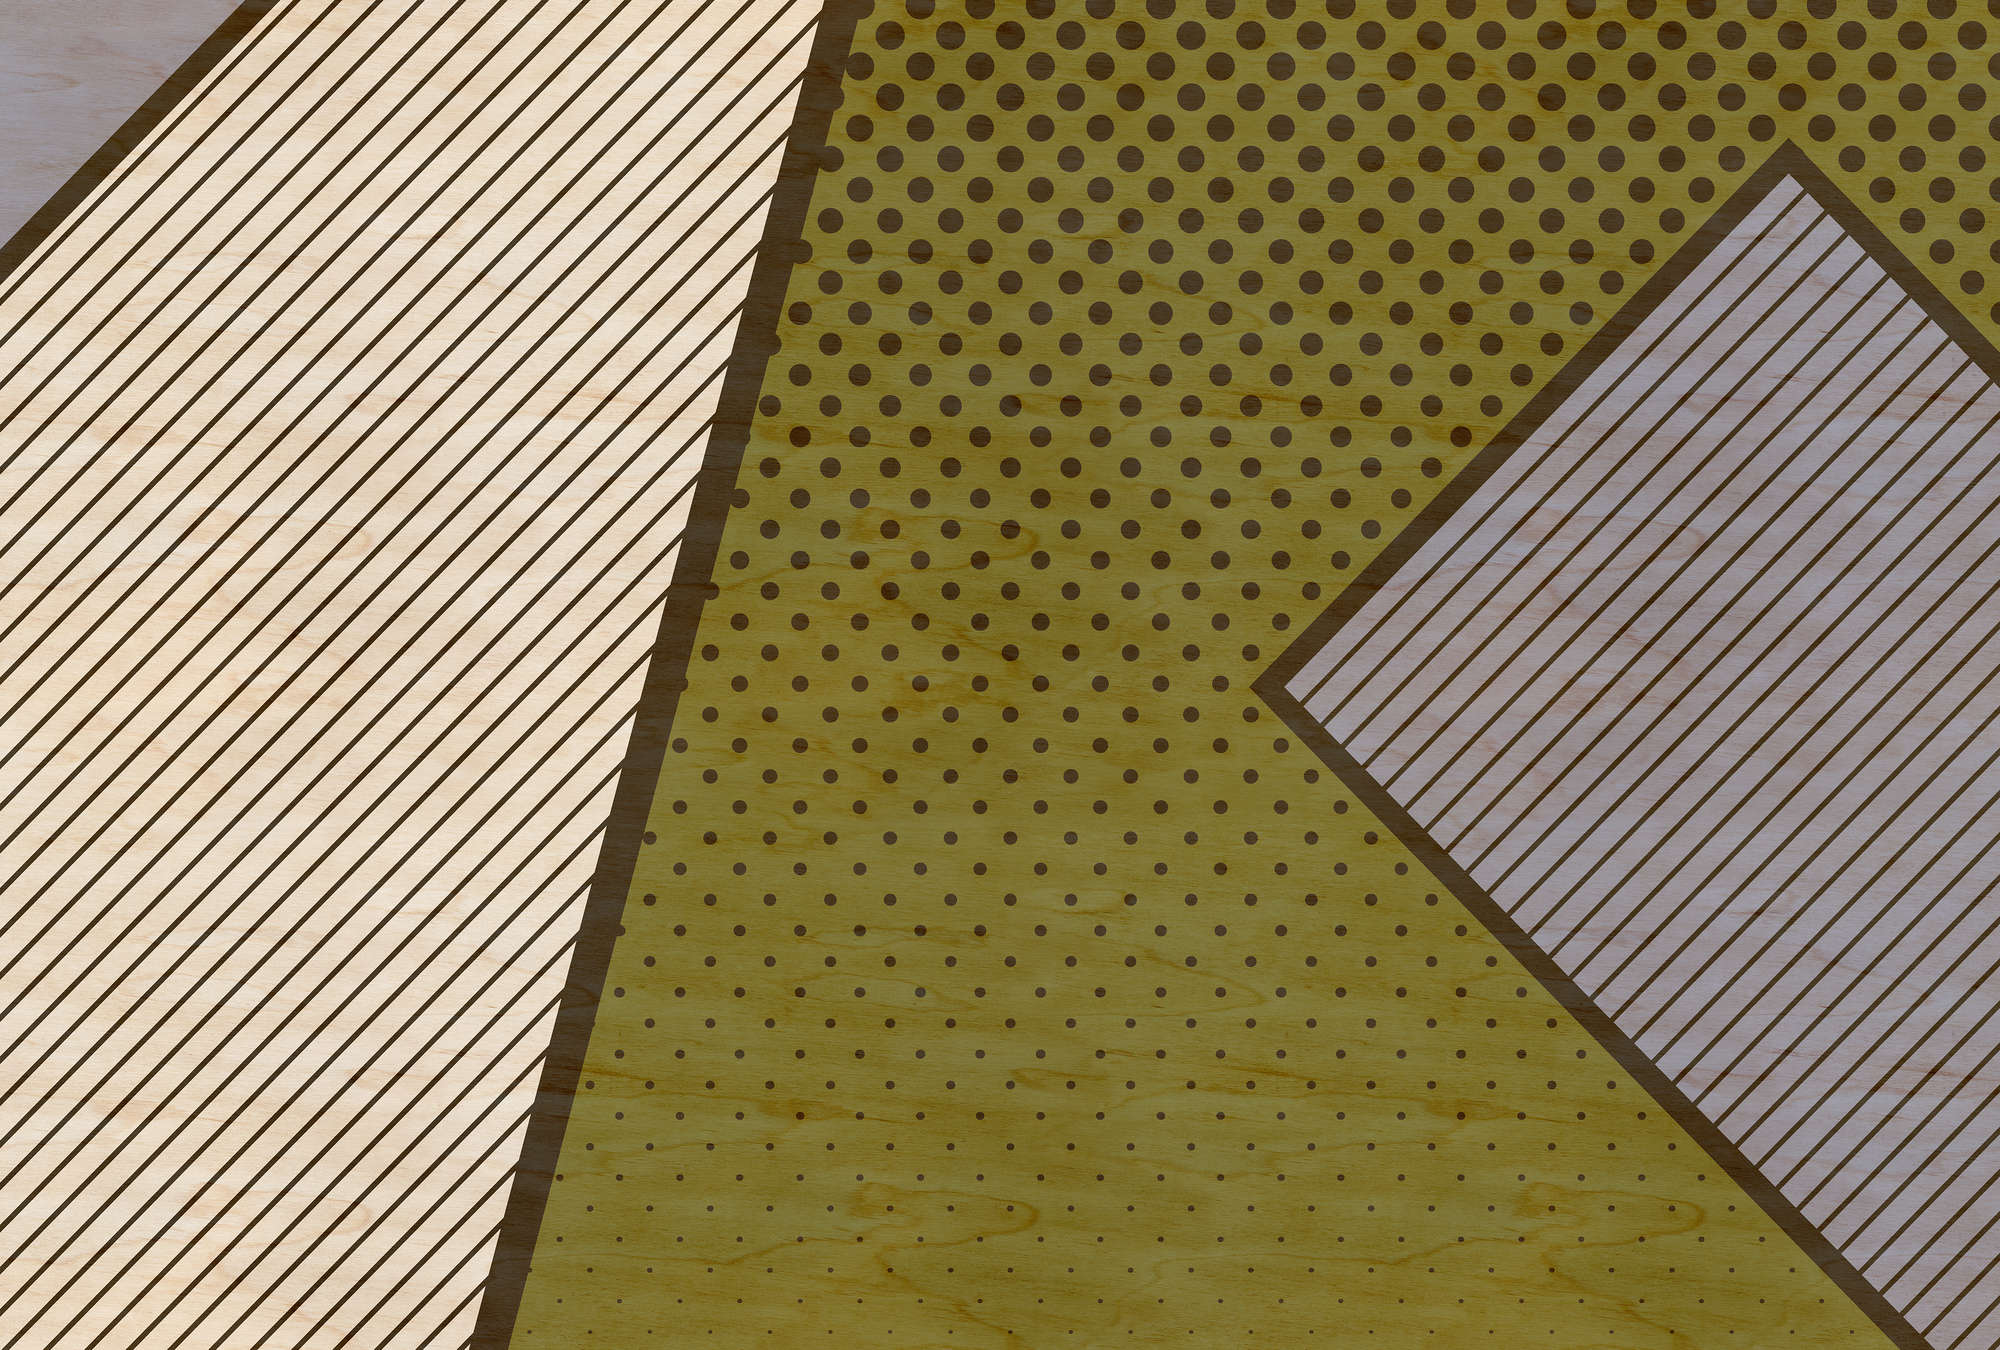             Bird gang 2 - Fototapete, modernes Muster im Pop Art Stil- Sperrholz Struktur – Beige, Gelb | Perlmutt Glattvlies
        